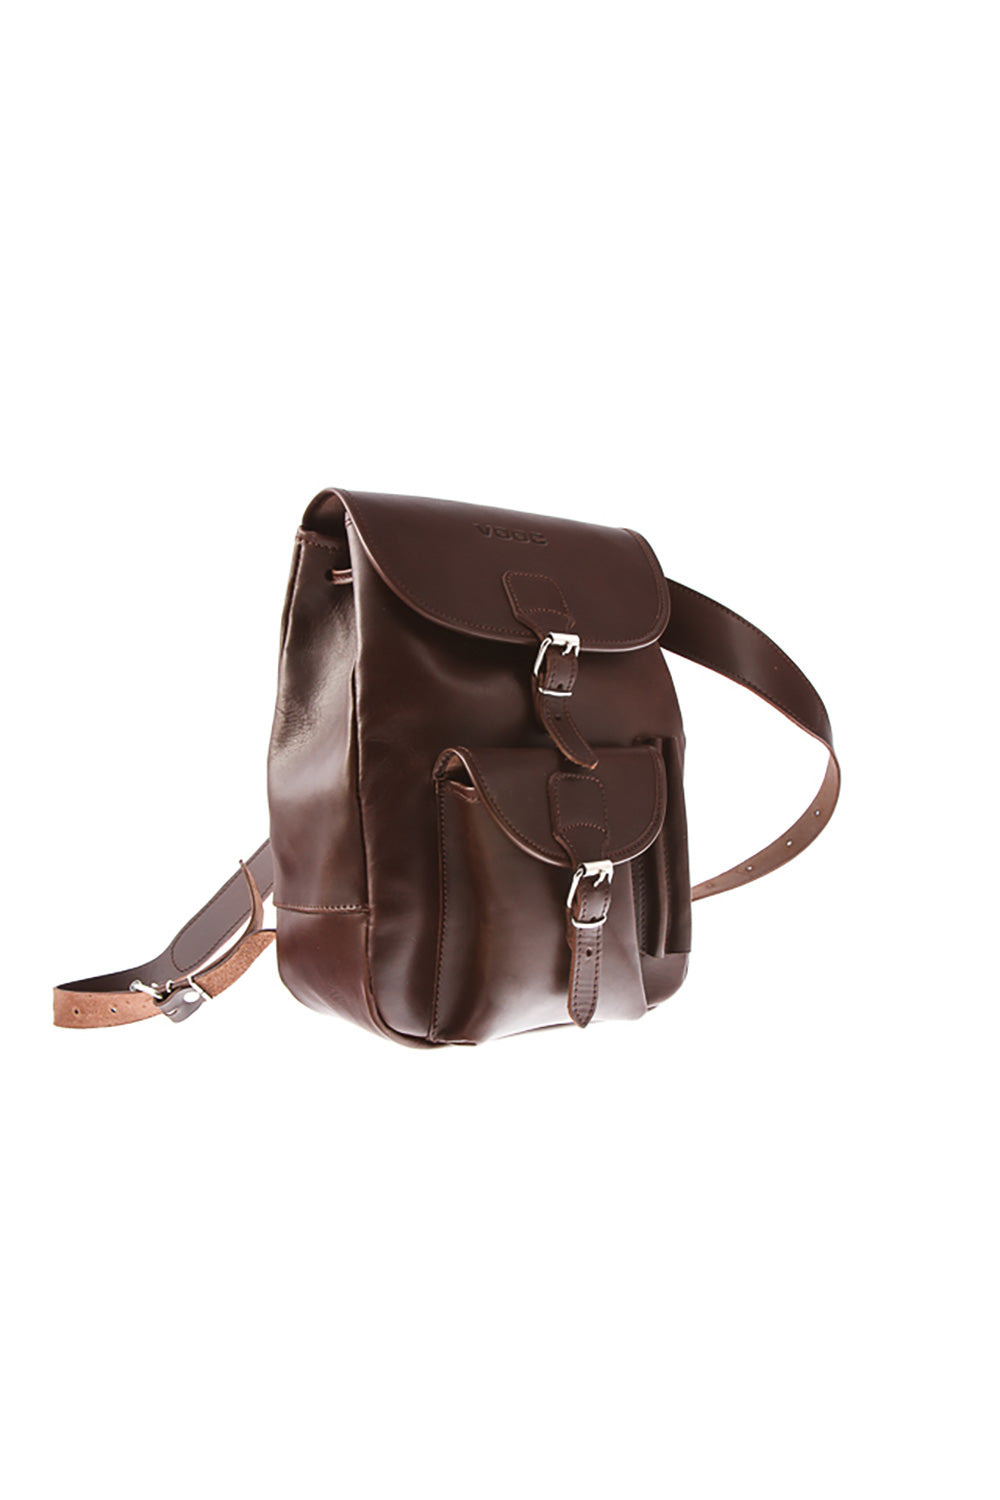 Rucksack model 152170 Elsy Style Casual Handbags, Shoulder Bags